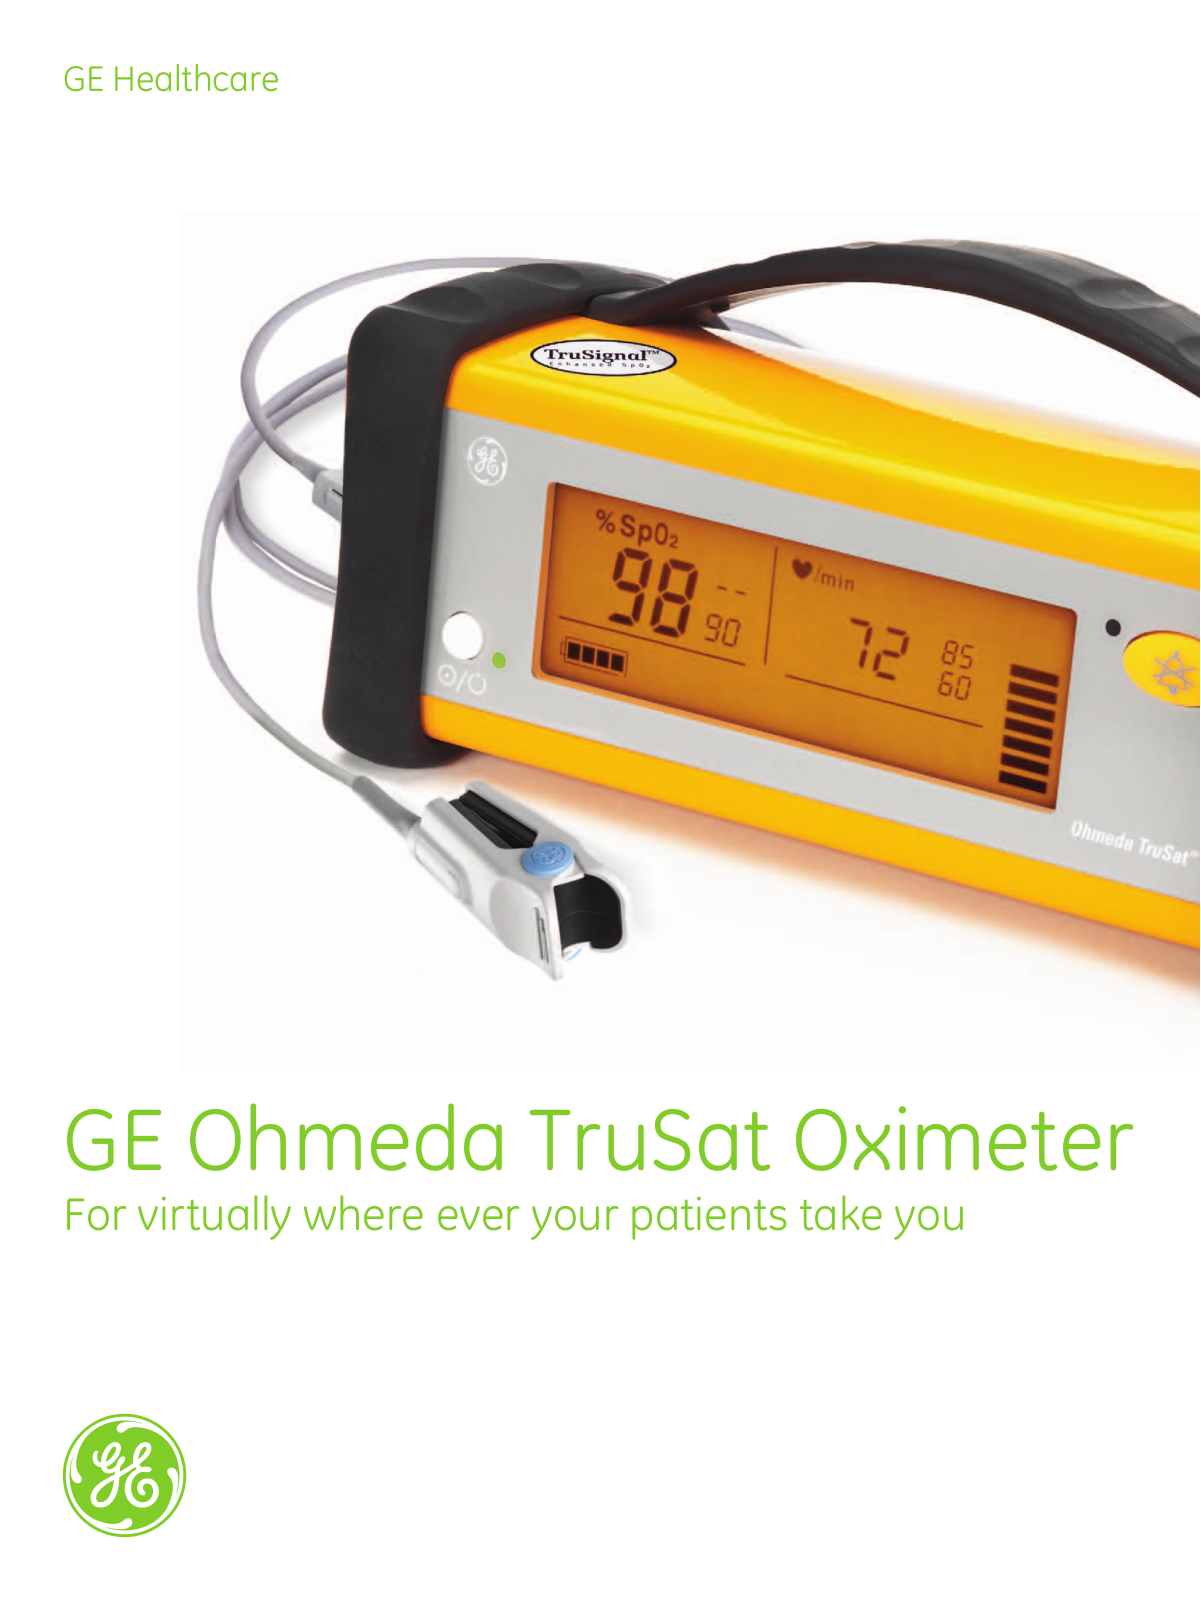 GE Healthcare GE Ohmeda TruSat Oximeter Brochure